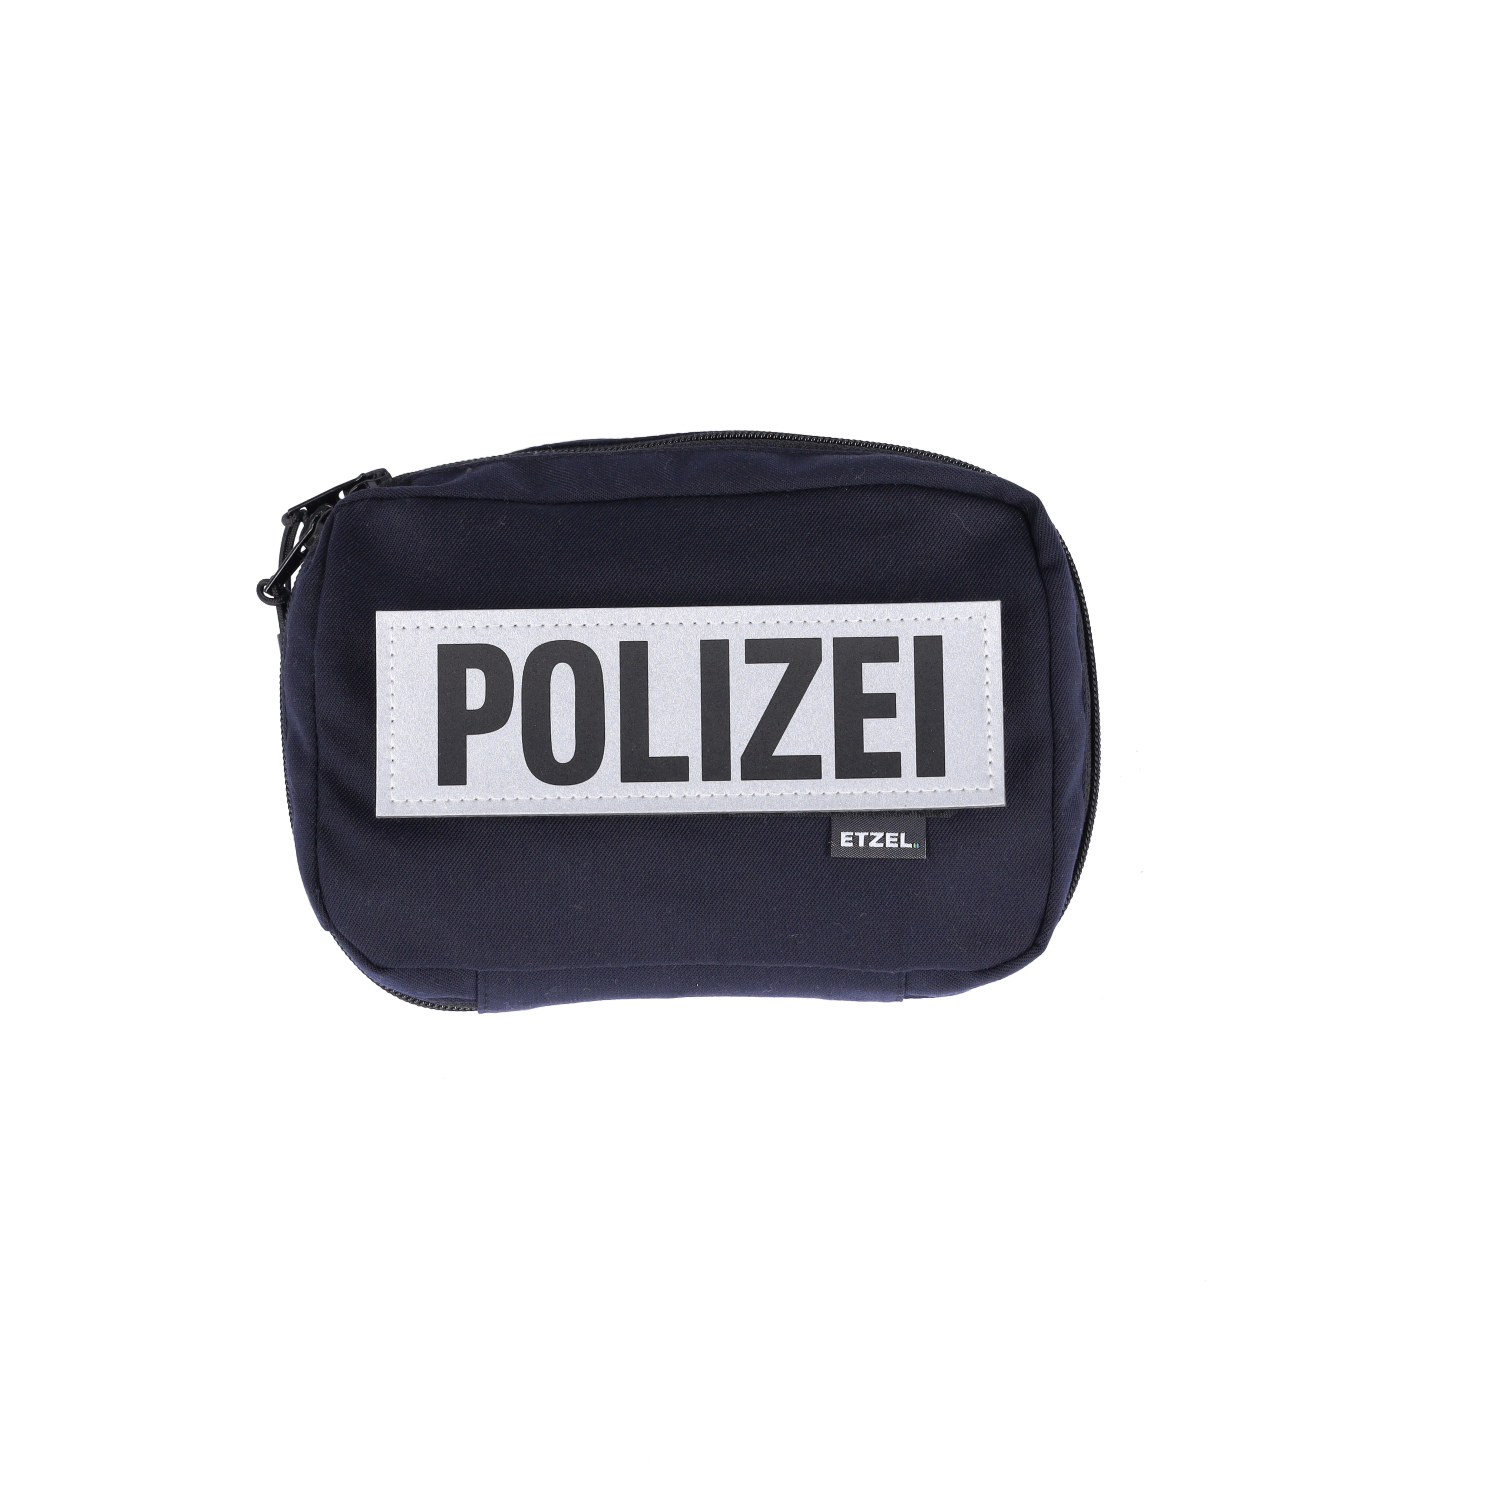 XL cut, sew & play Nähset inkl. großer Tasche WUNSCHNAME Polizei